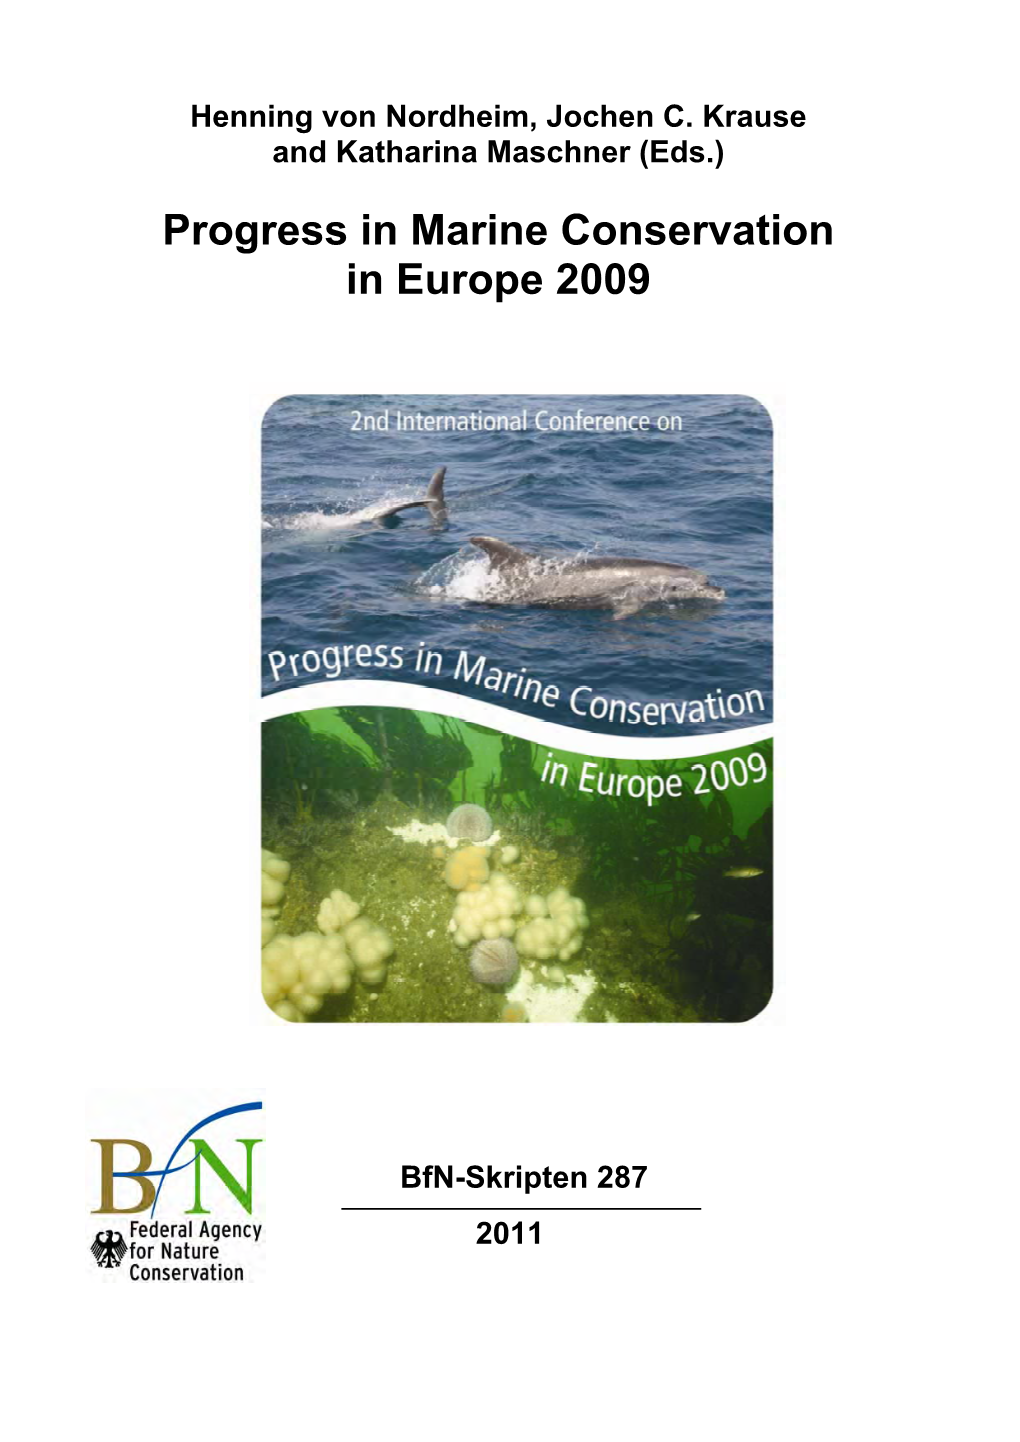 Progress in Marine Conservation in Europe 2009